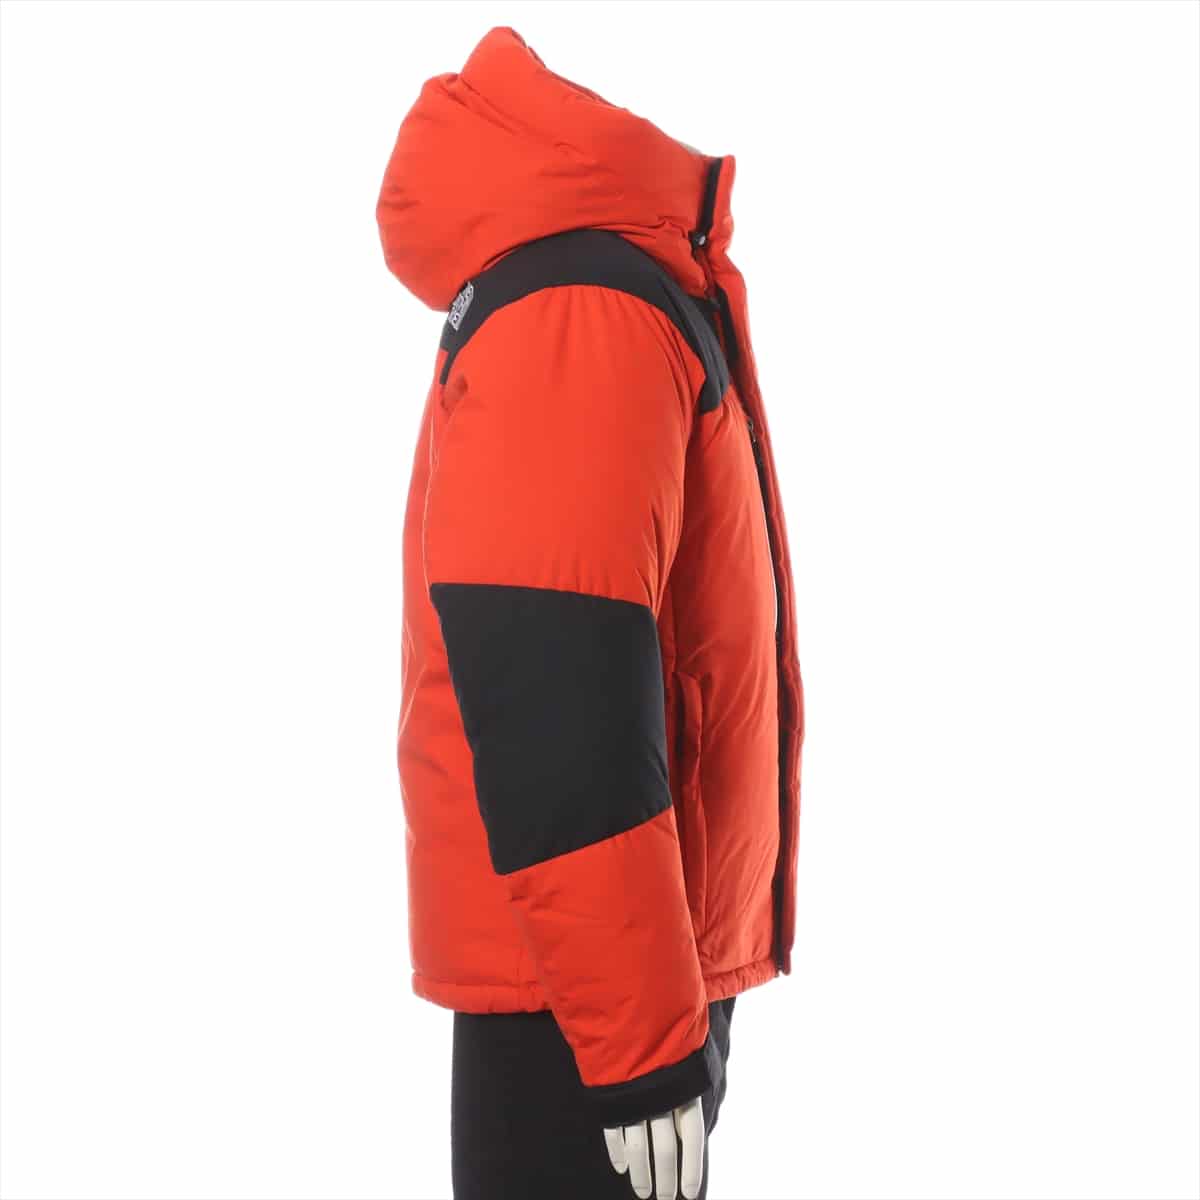 The North Face Nylon Down jacket M Men's Orange  ND91201 BALTRO LIGHT JACKET